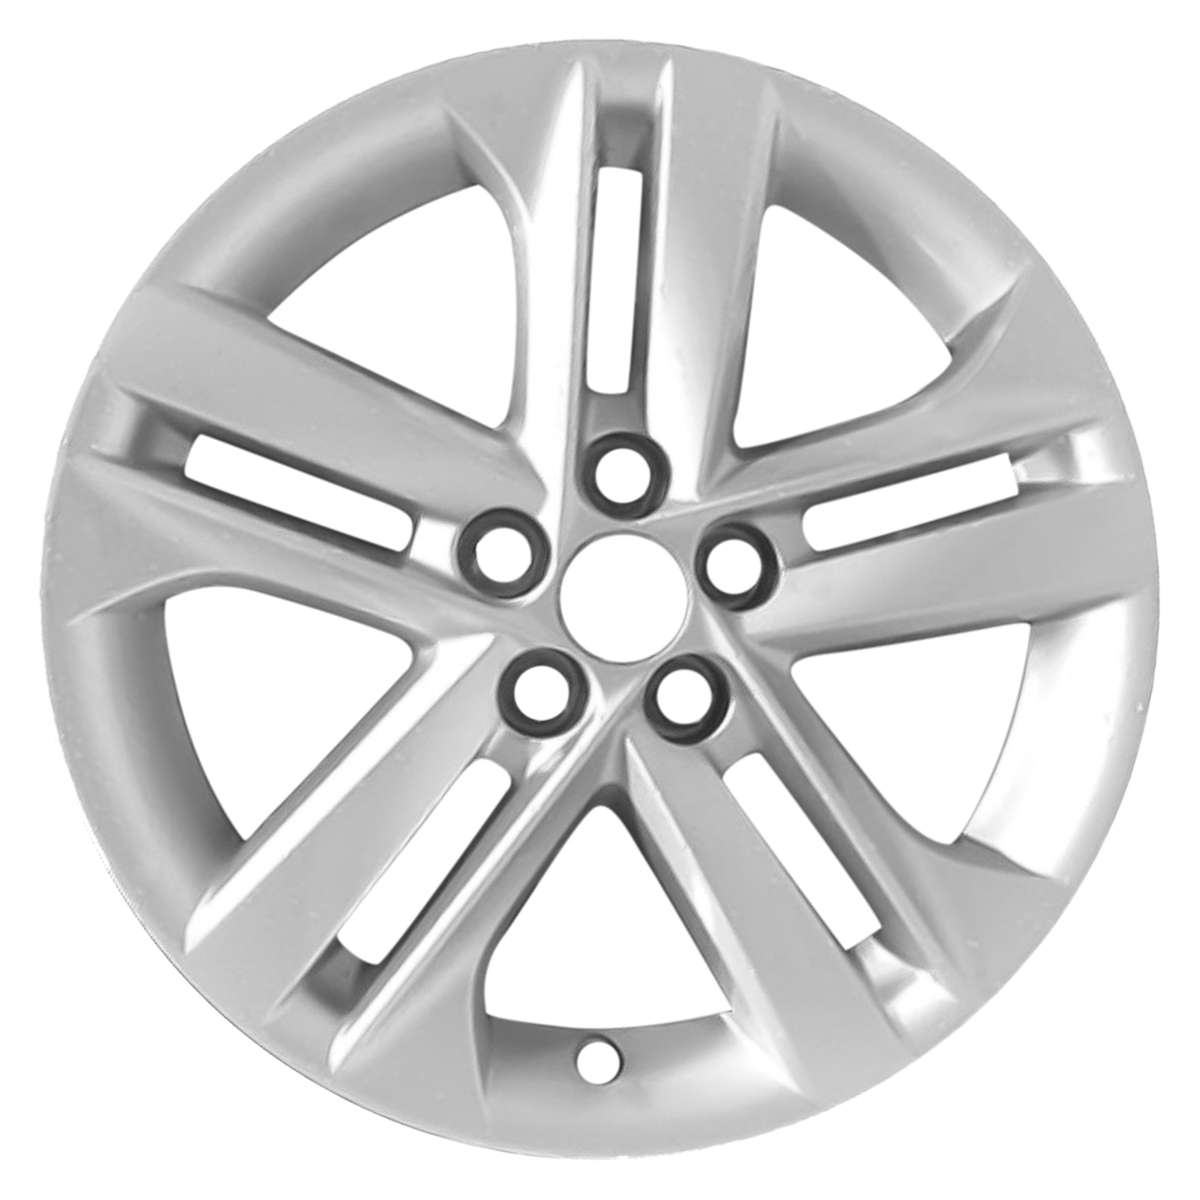 2022 Toyota Corolla New 16" Replacement Wheel Rim RW75235S